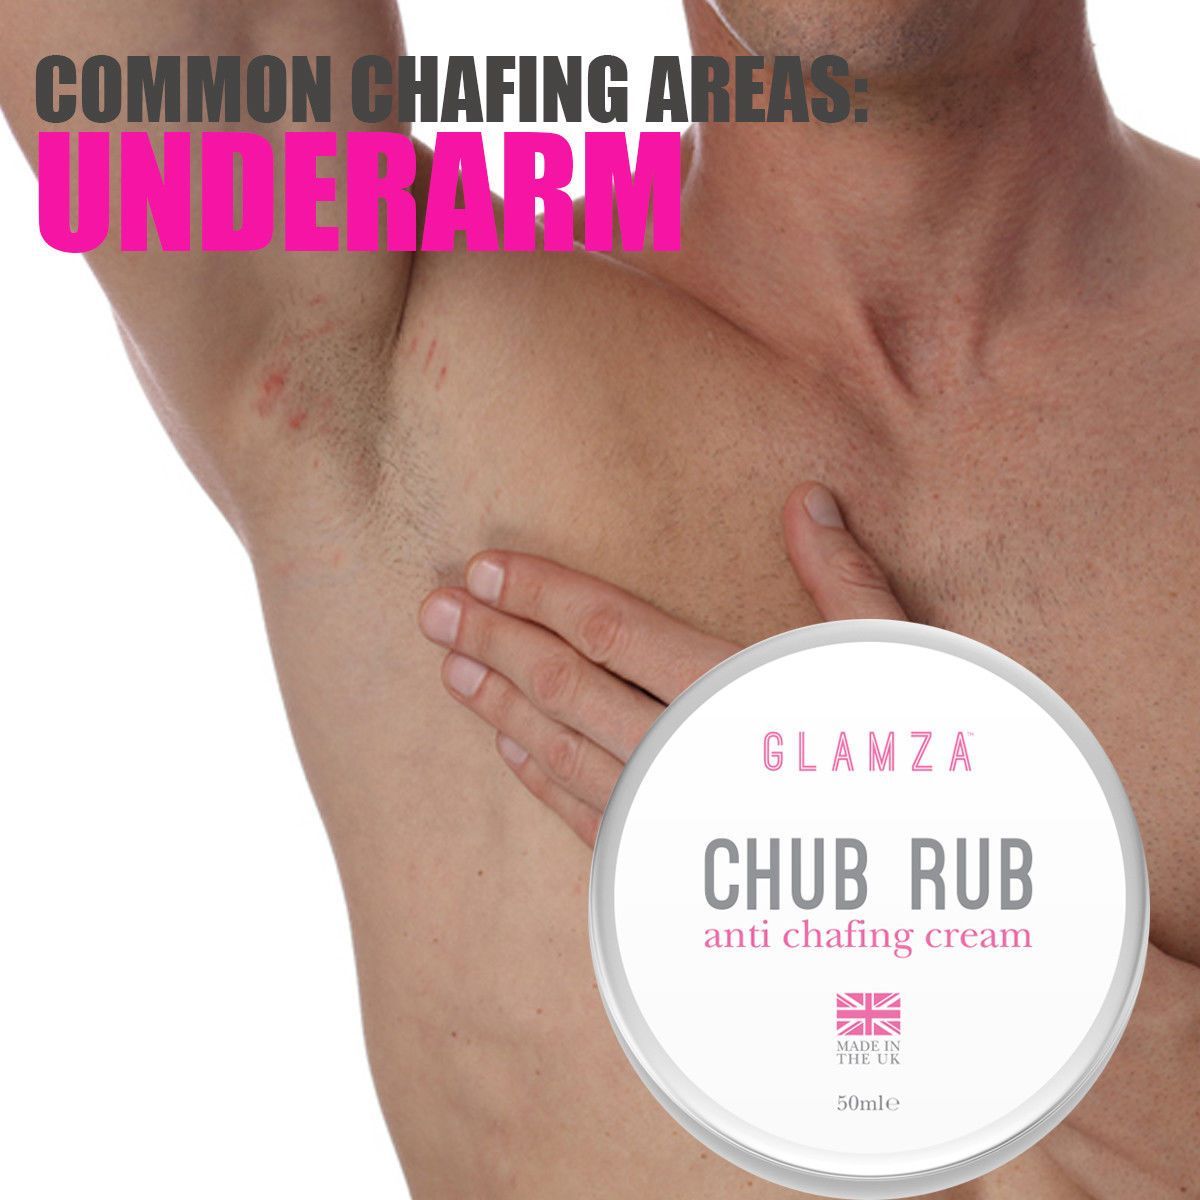 Glamza 302 Chub Rub 50ml Anti Chafing Cream for sale online